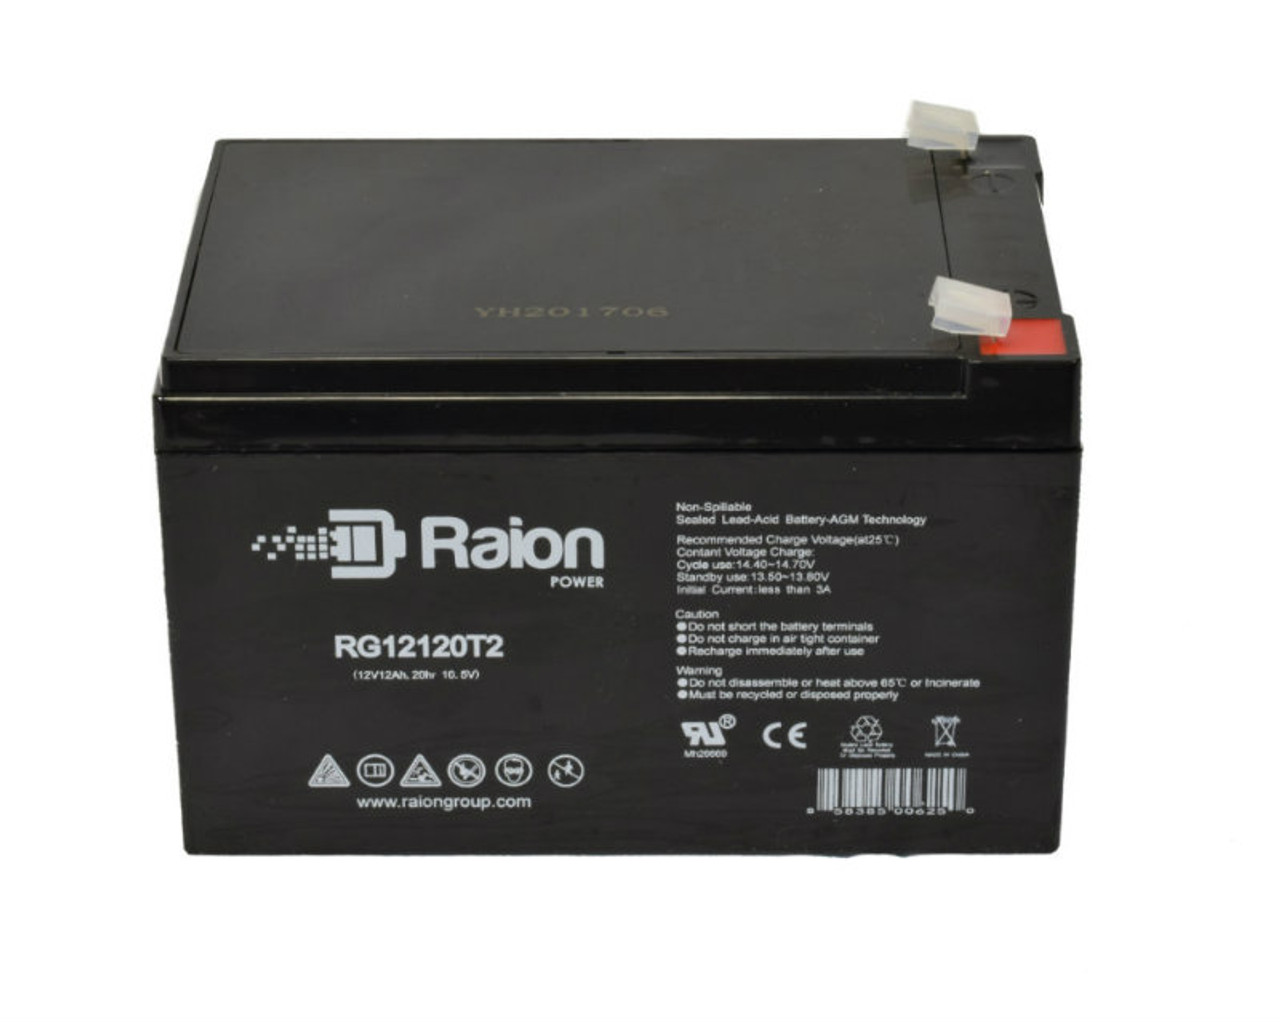 Raion Power RG12120T2 SLA Battery for Voltmax VX-12120